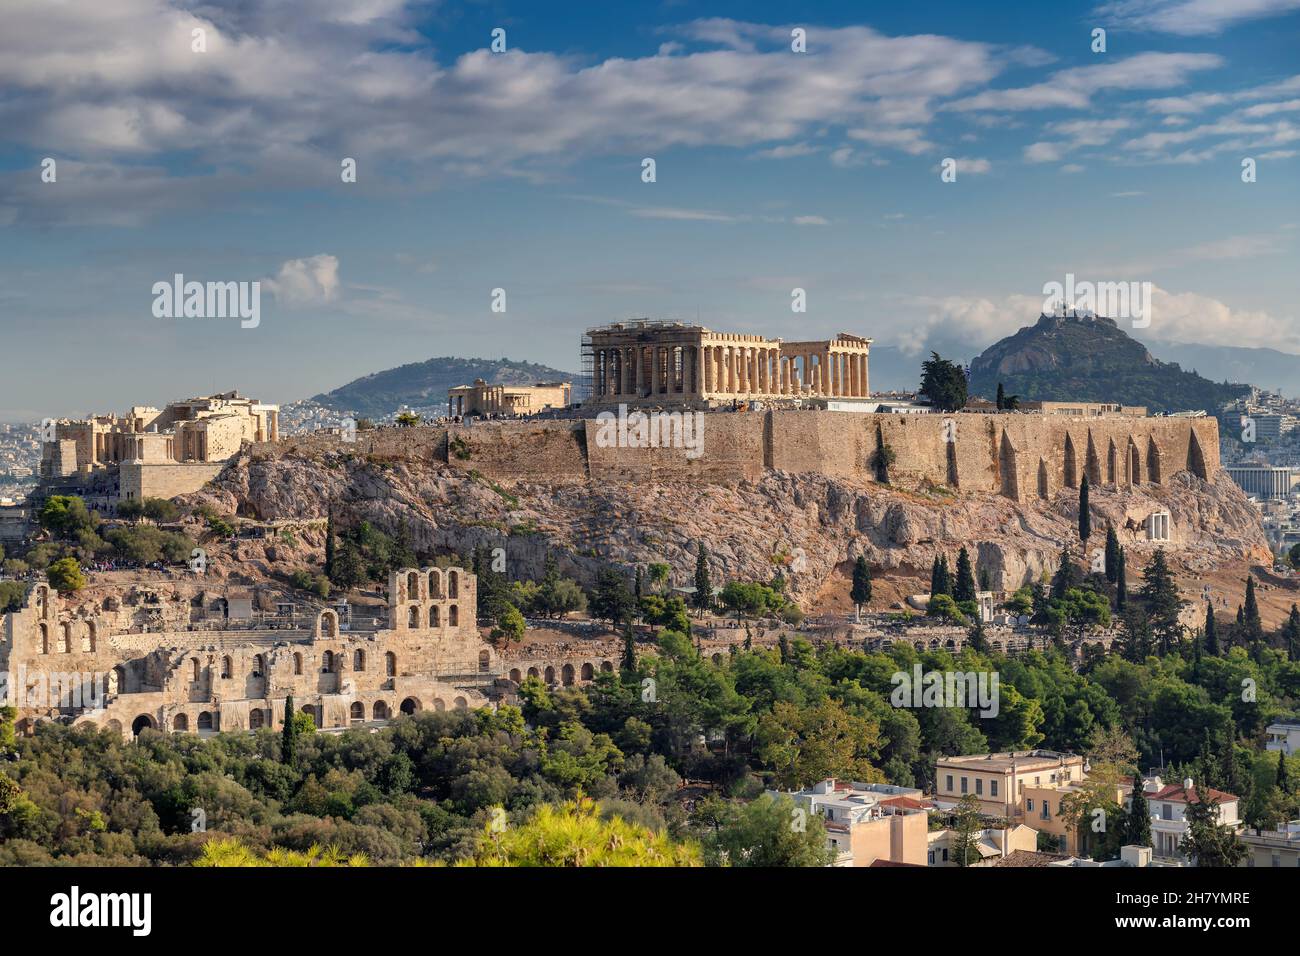 Acropolis of Athens in Acropolis Hill with the Parthenon Temple, Greece Stock Photo